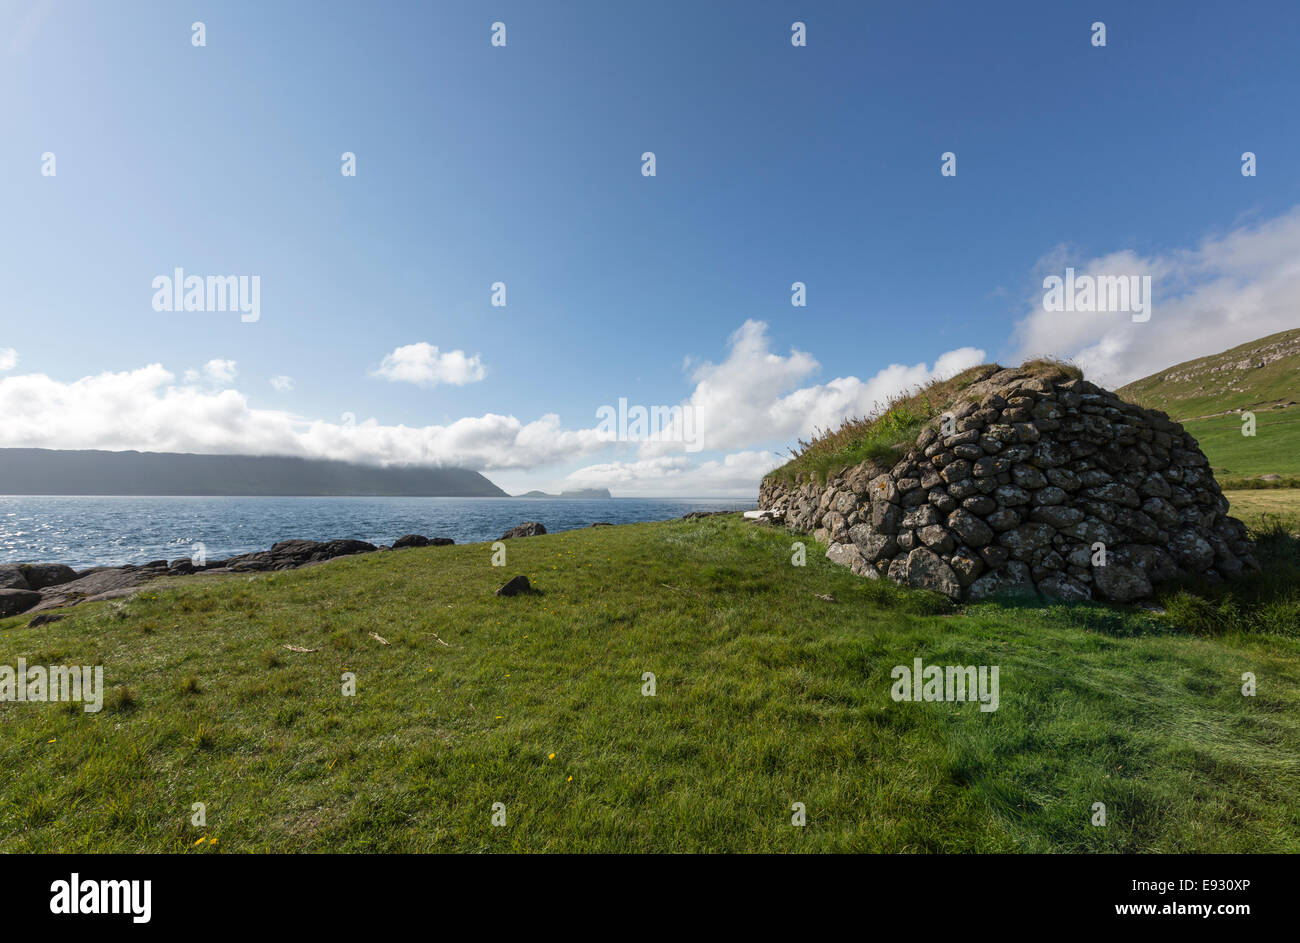 Stone  shelter with  roof  turf covered in Kirkjubøur, Streymoy island, Faroe Islands, Stock Photo